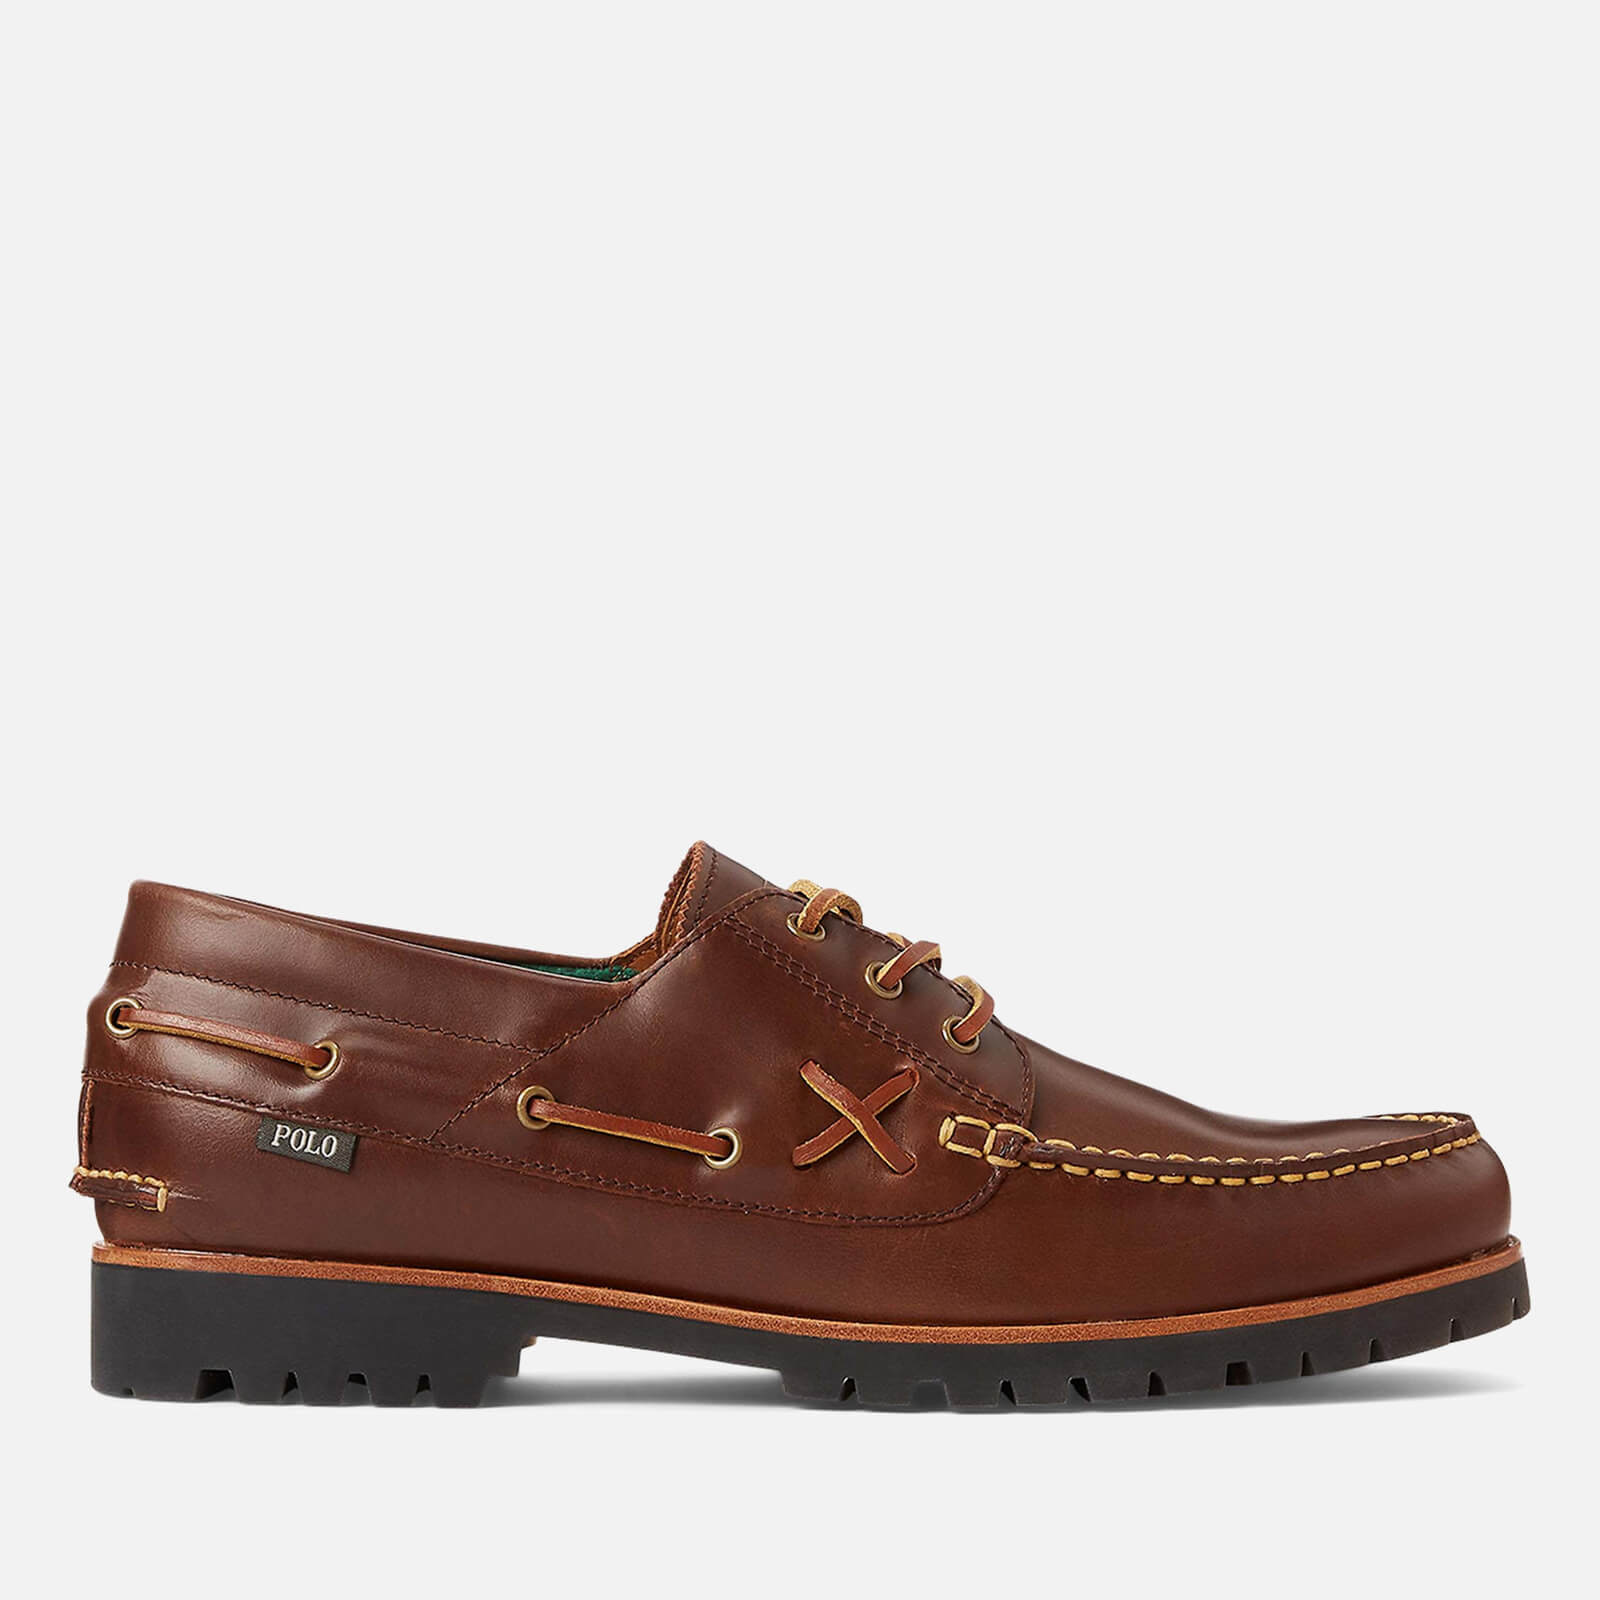 Polo Ralph Lauren Men's Leather Boat Shoes - UK 10